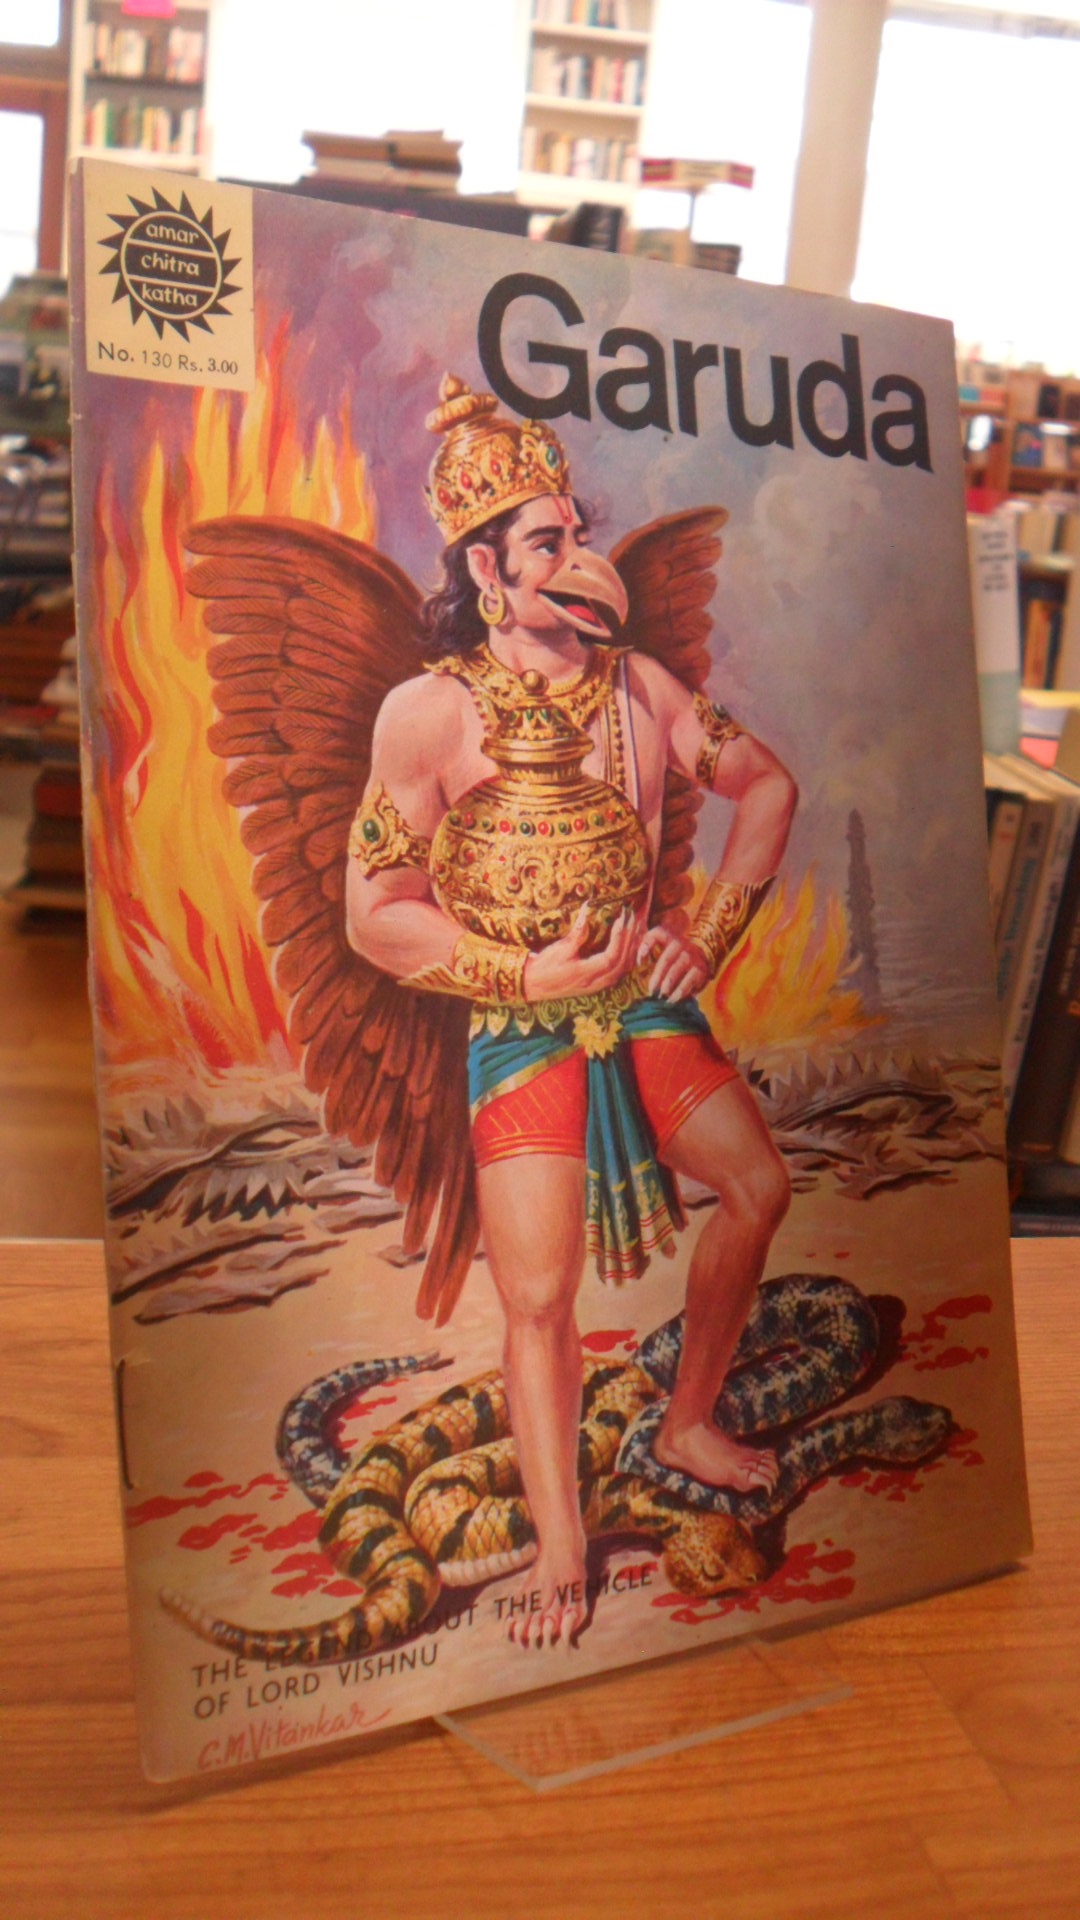 Pai, Garuda – The Legend About The Vehicle Of Lord Vishnu,